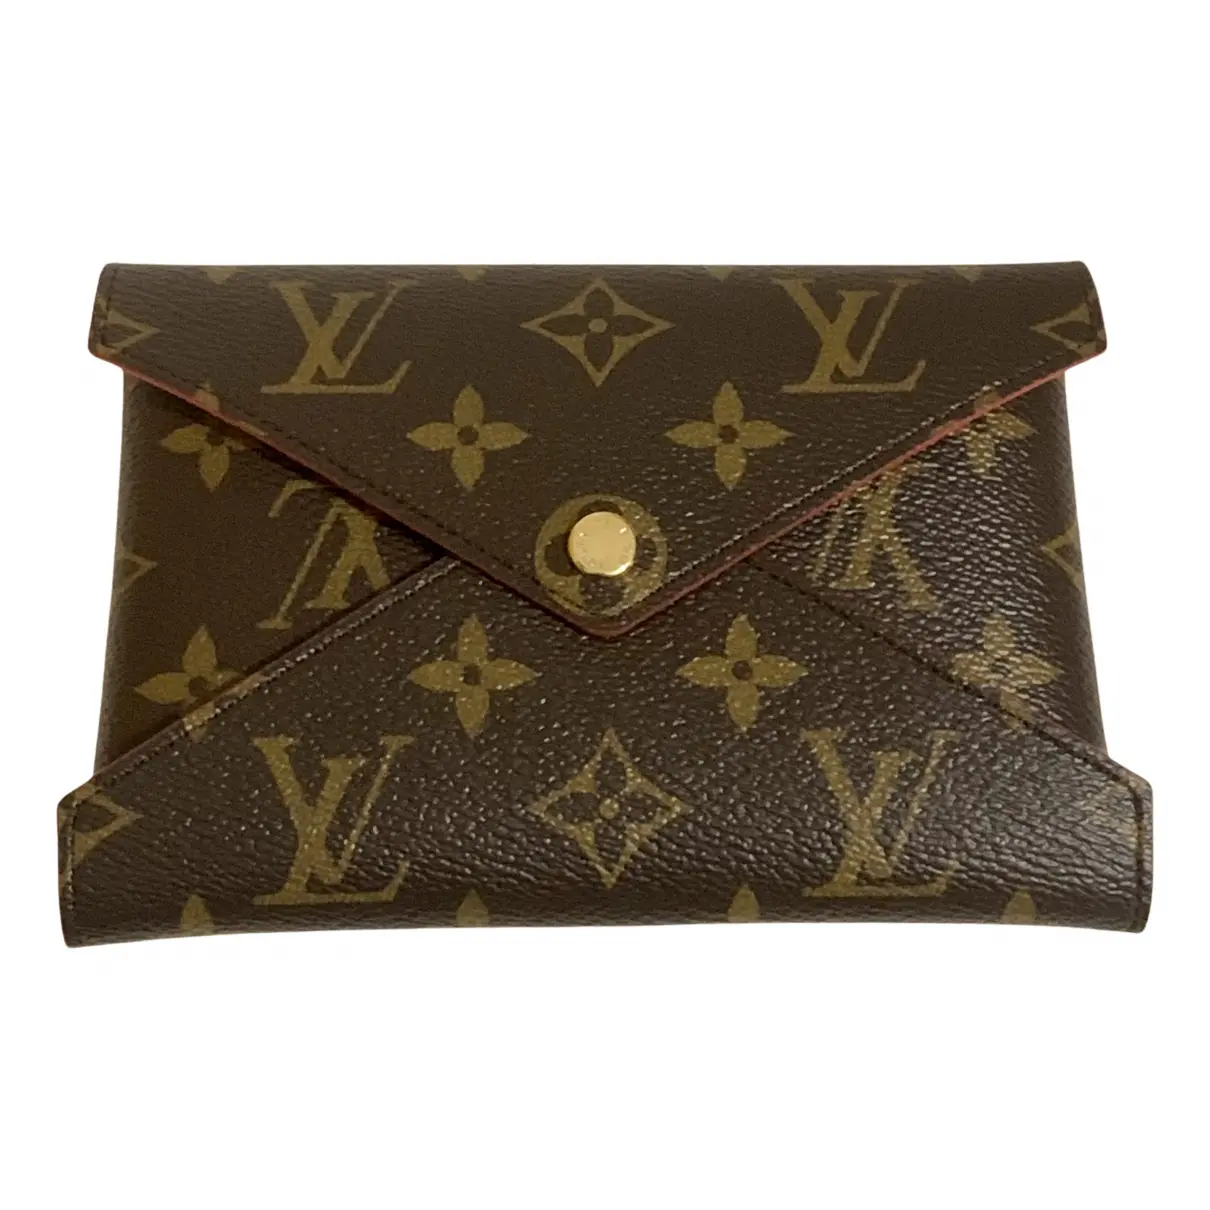 Kirigami leather clutch bag Louis Vuitton